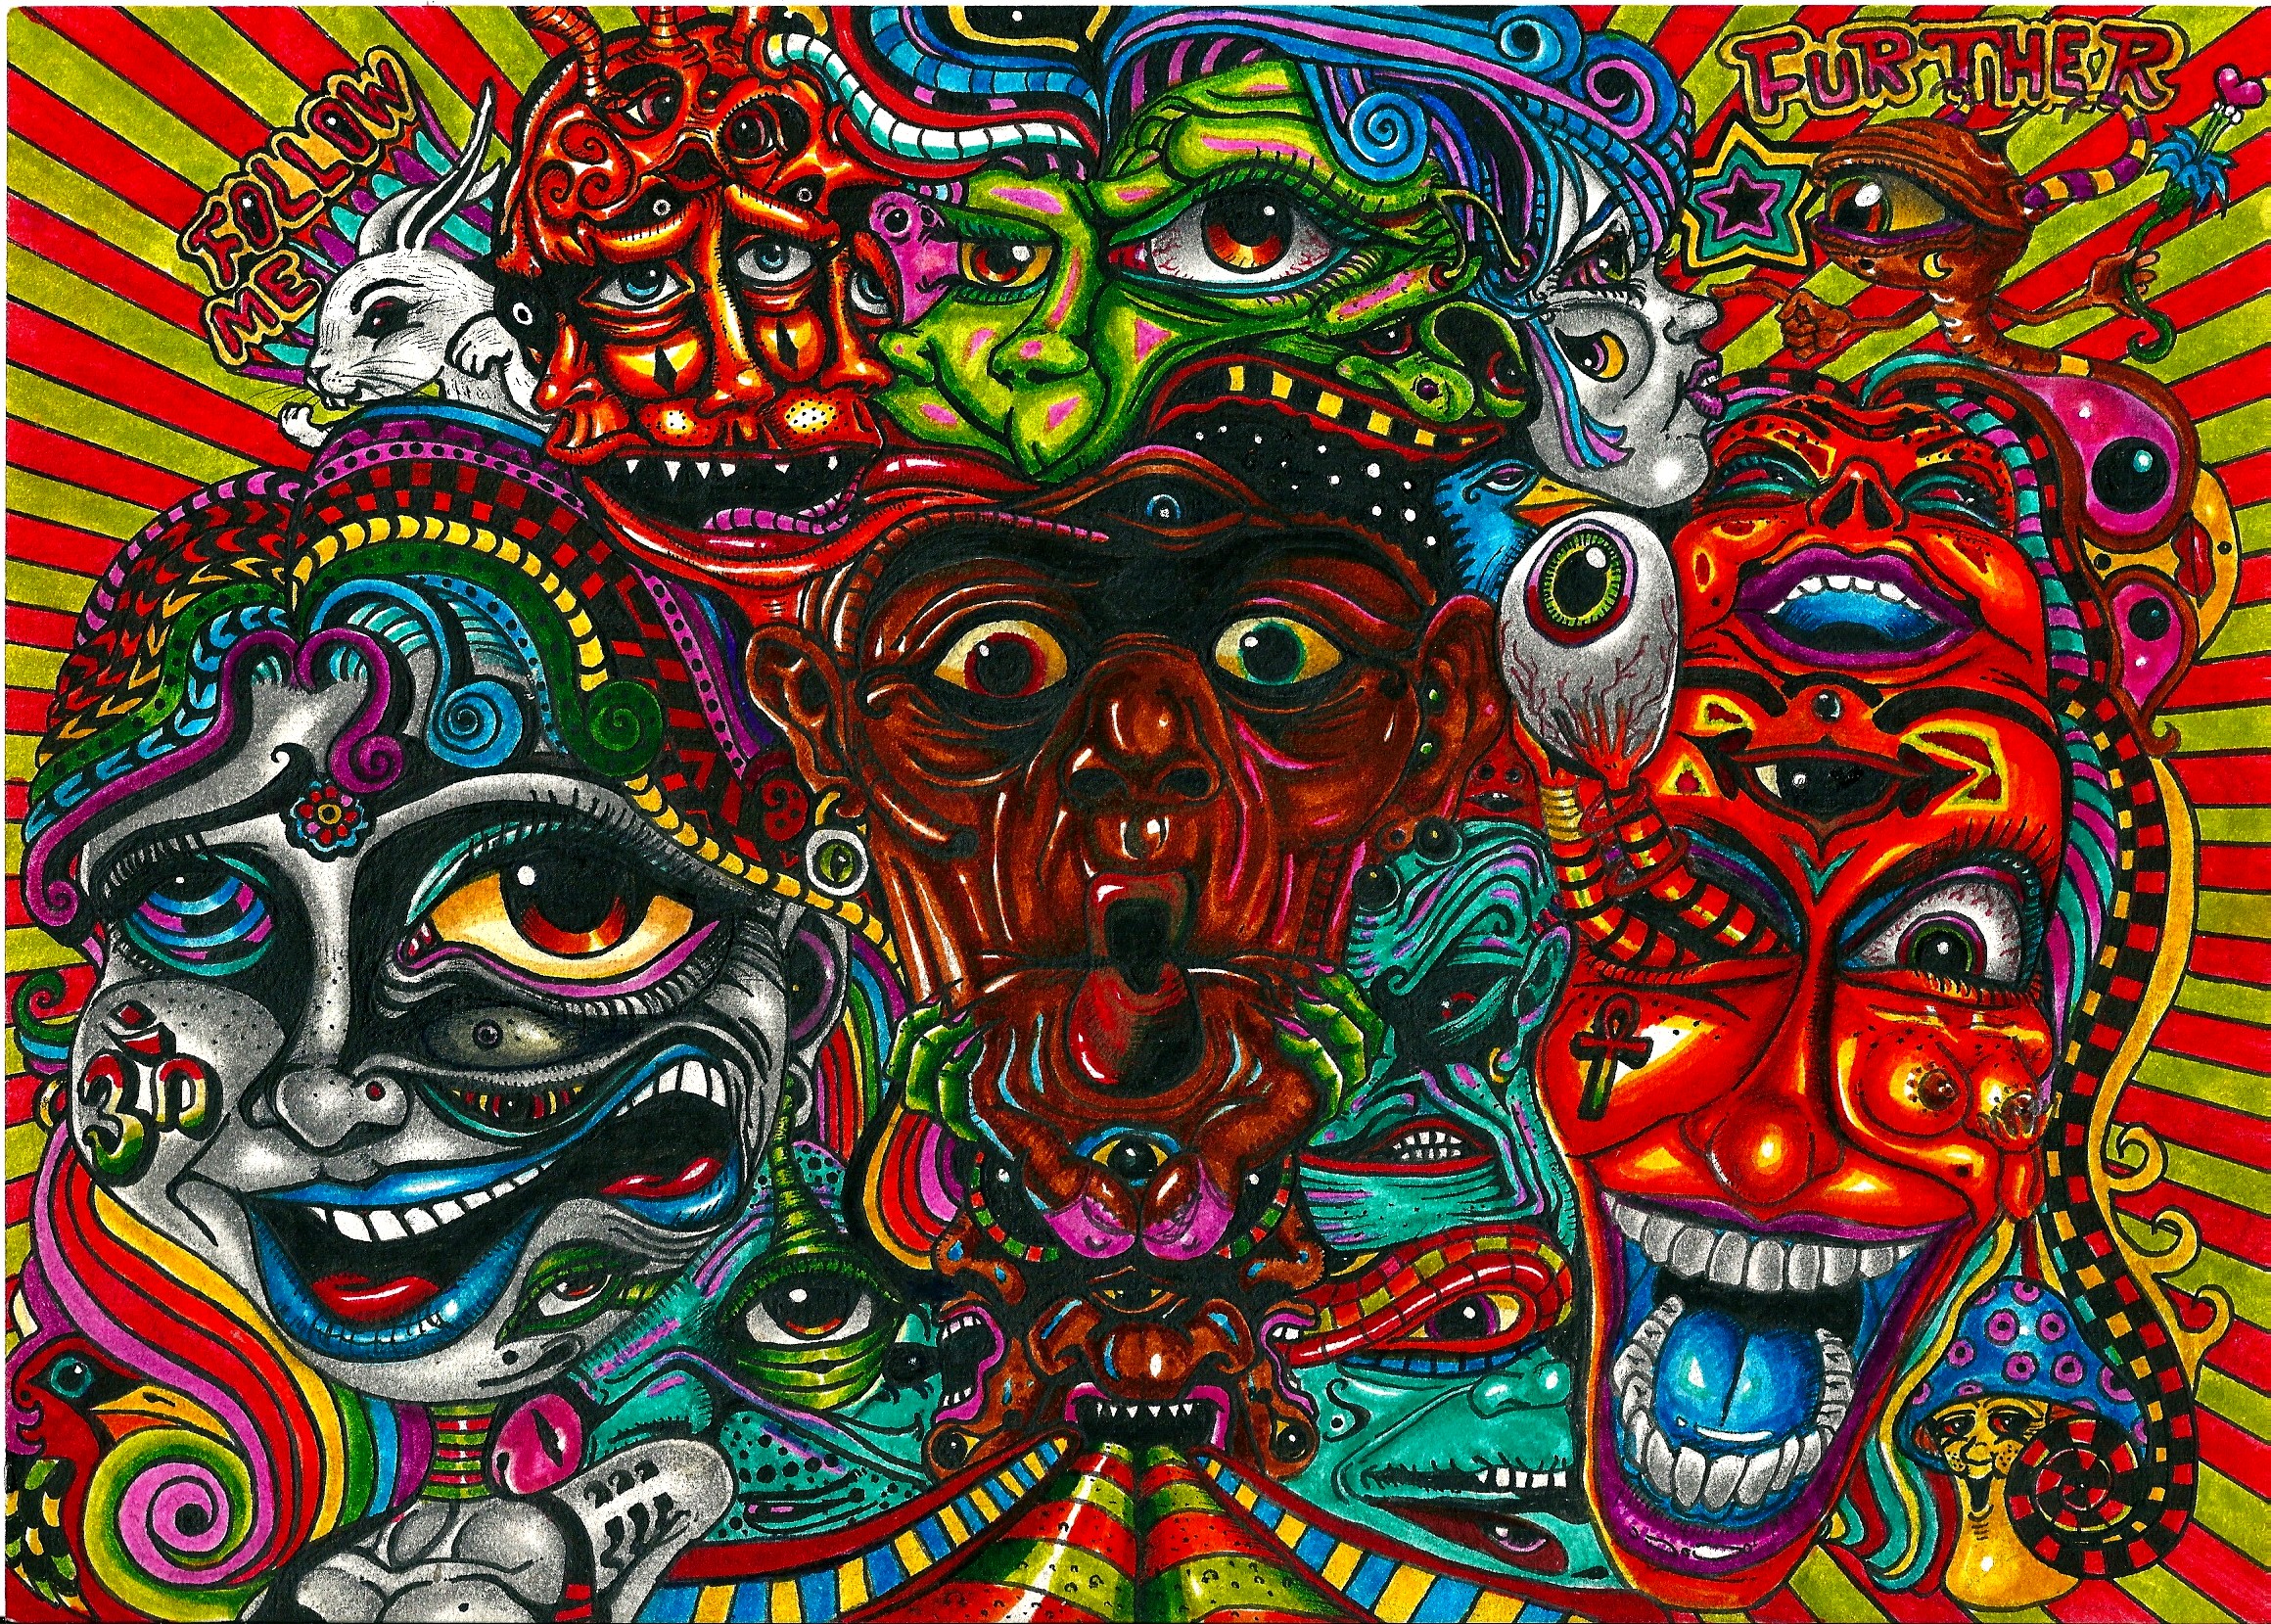 Acid Trip Wallpaper Image Amp Pictures Becuo